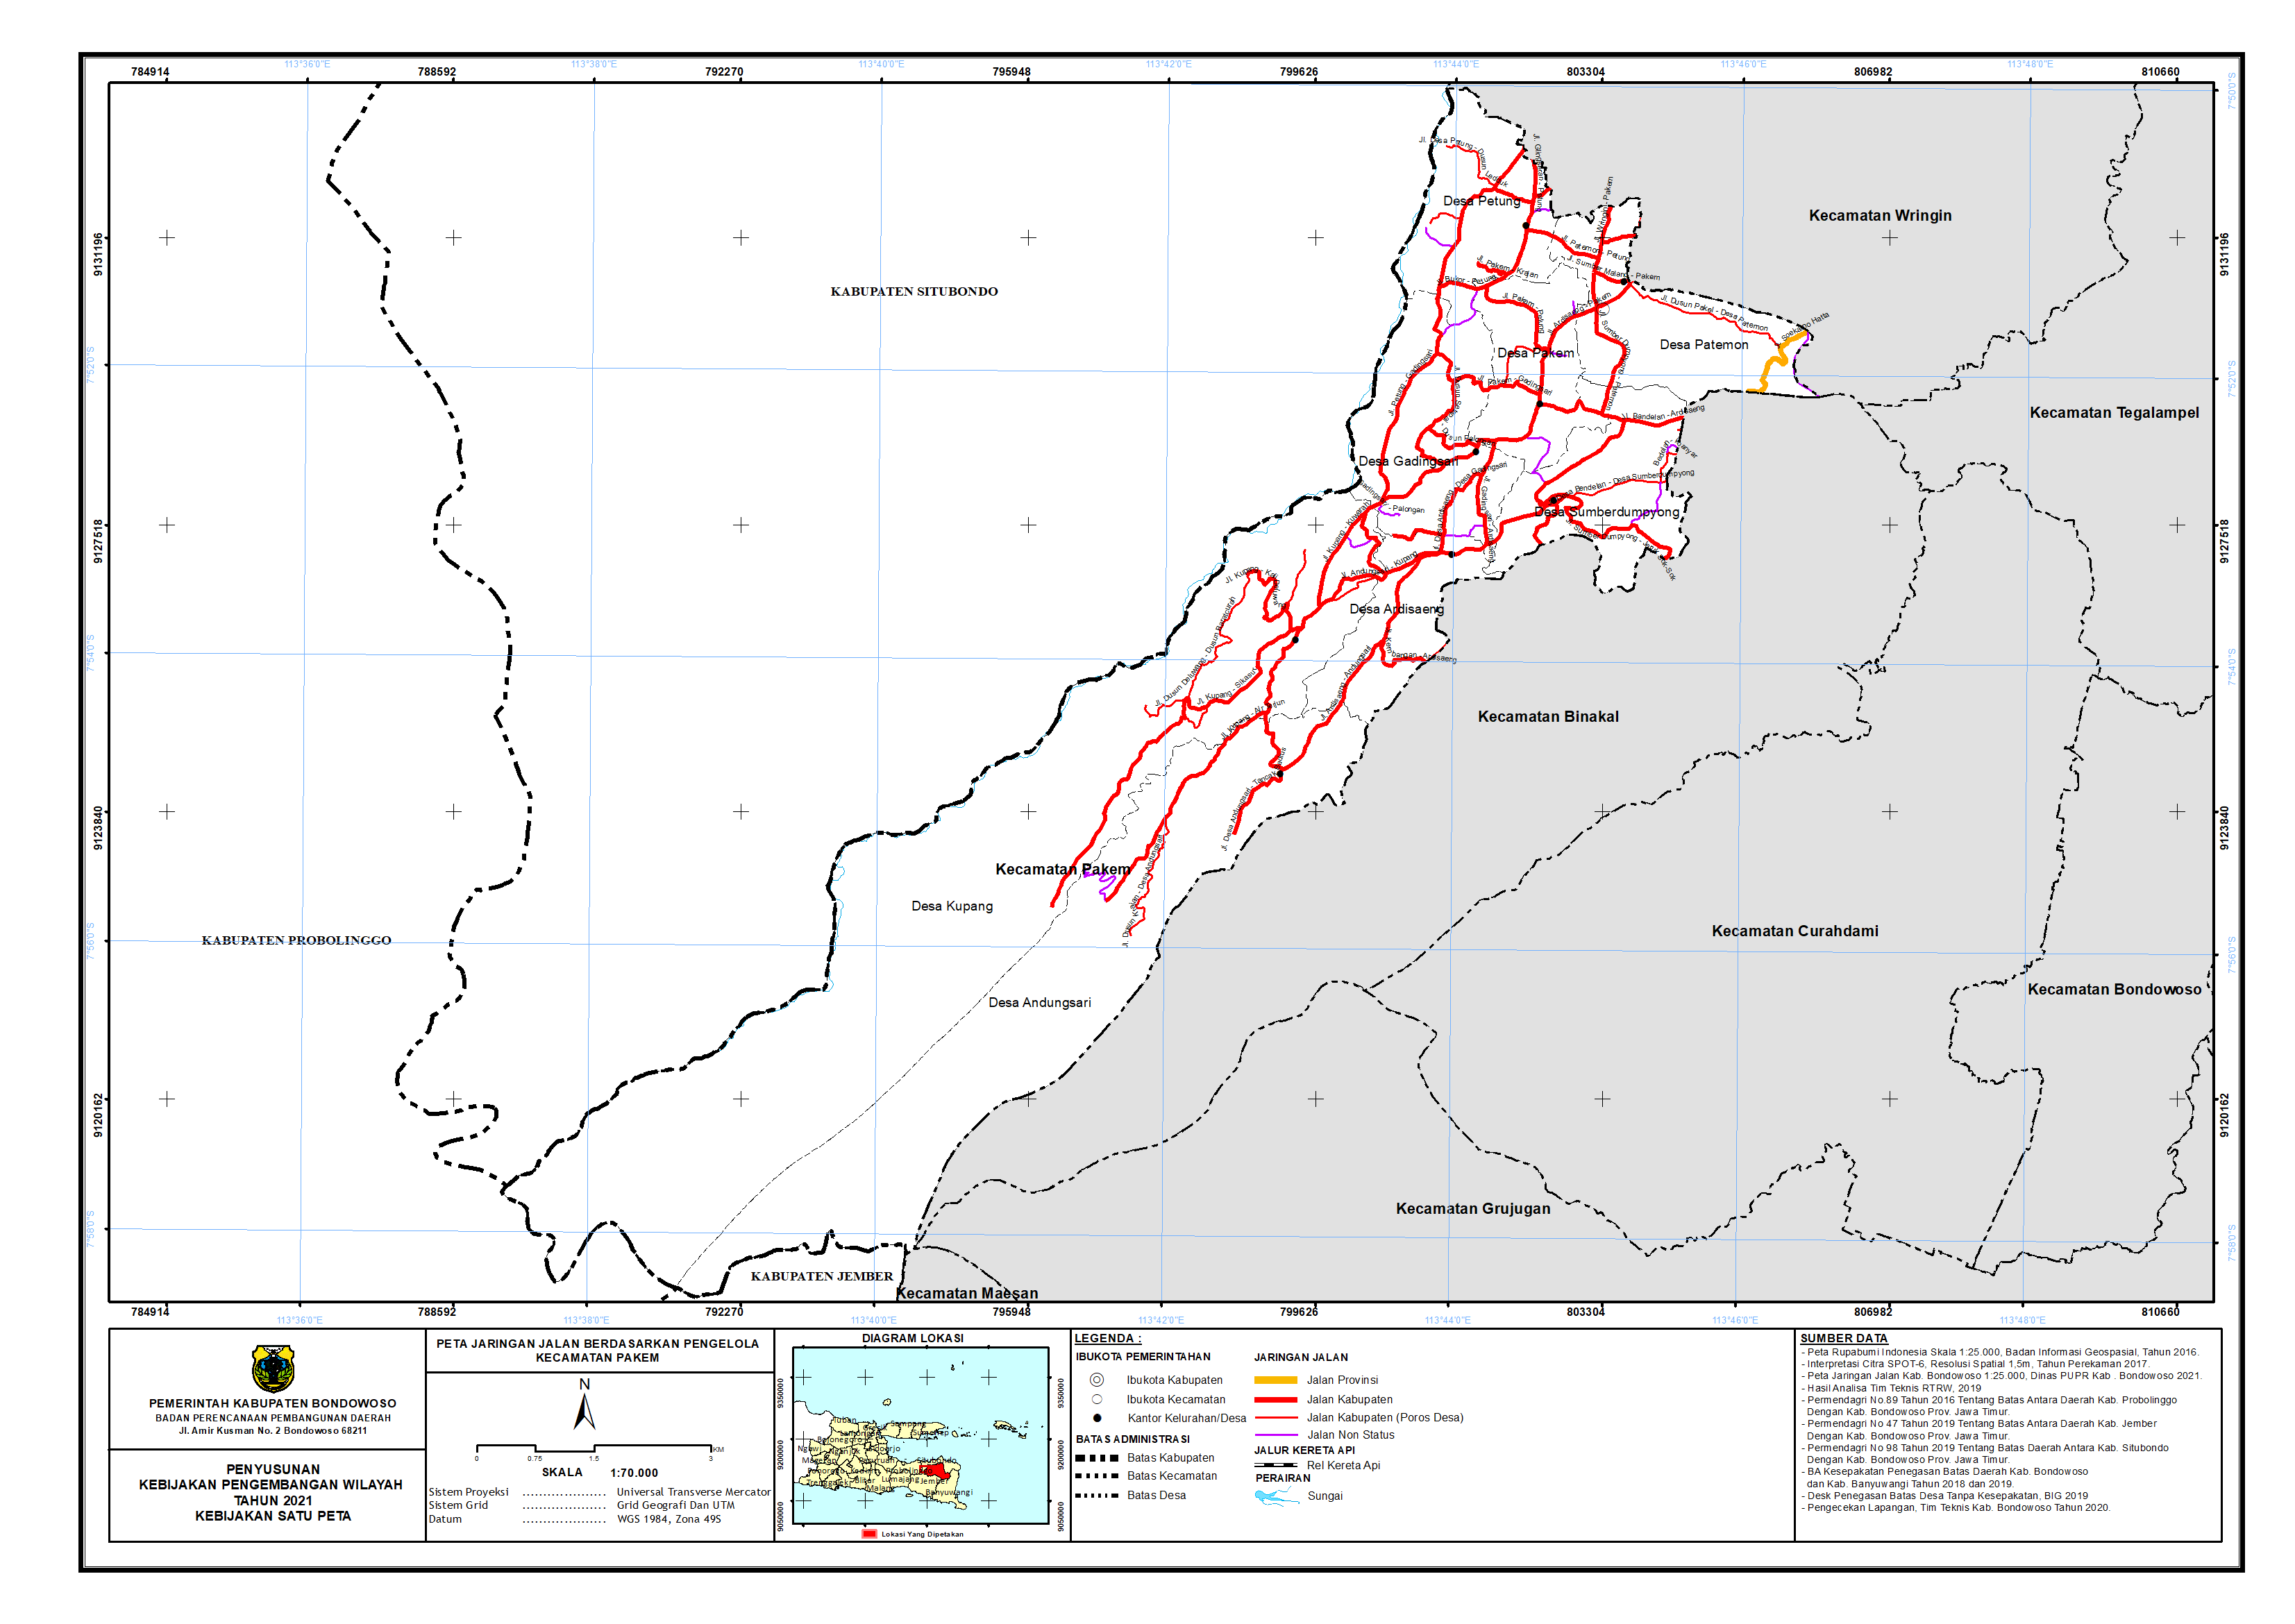 Peta Jaringan Jalan Berdasarkan Pengelola Kecamatan Pakem.png